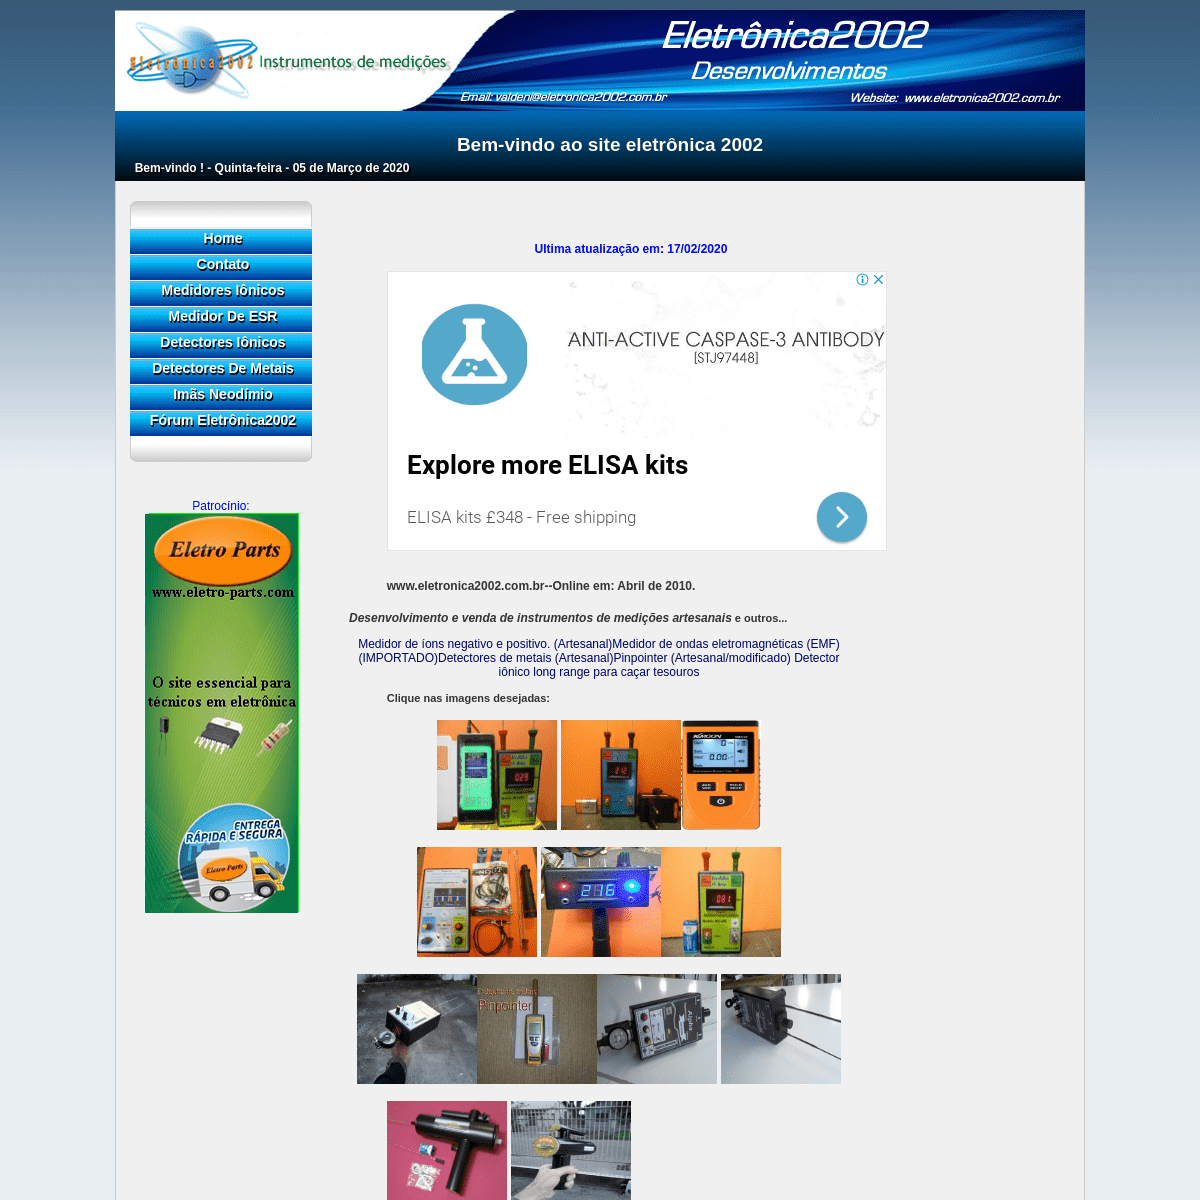 A complete backup of eletronica2002.com.br